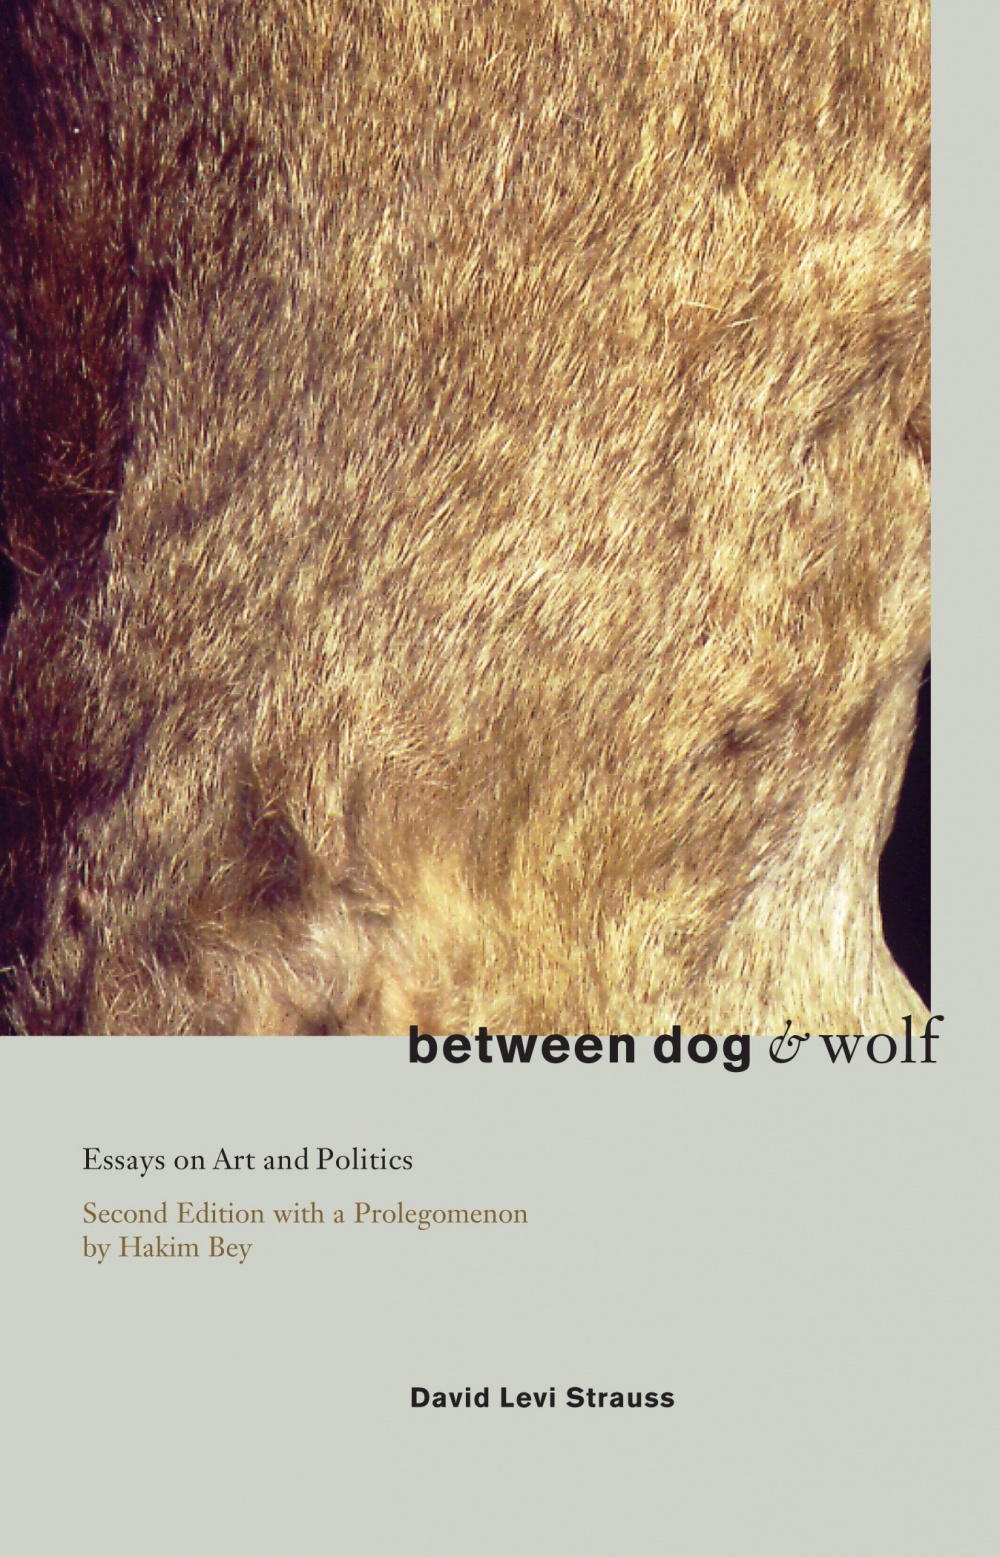 Between Dog and Wolf

Essays on Art & Politics

David Levi Strau